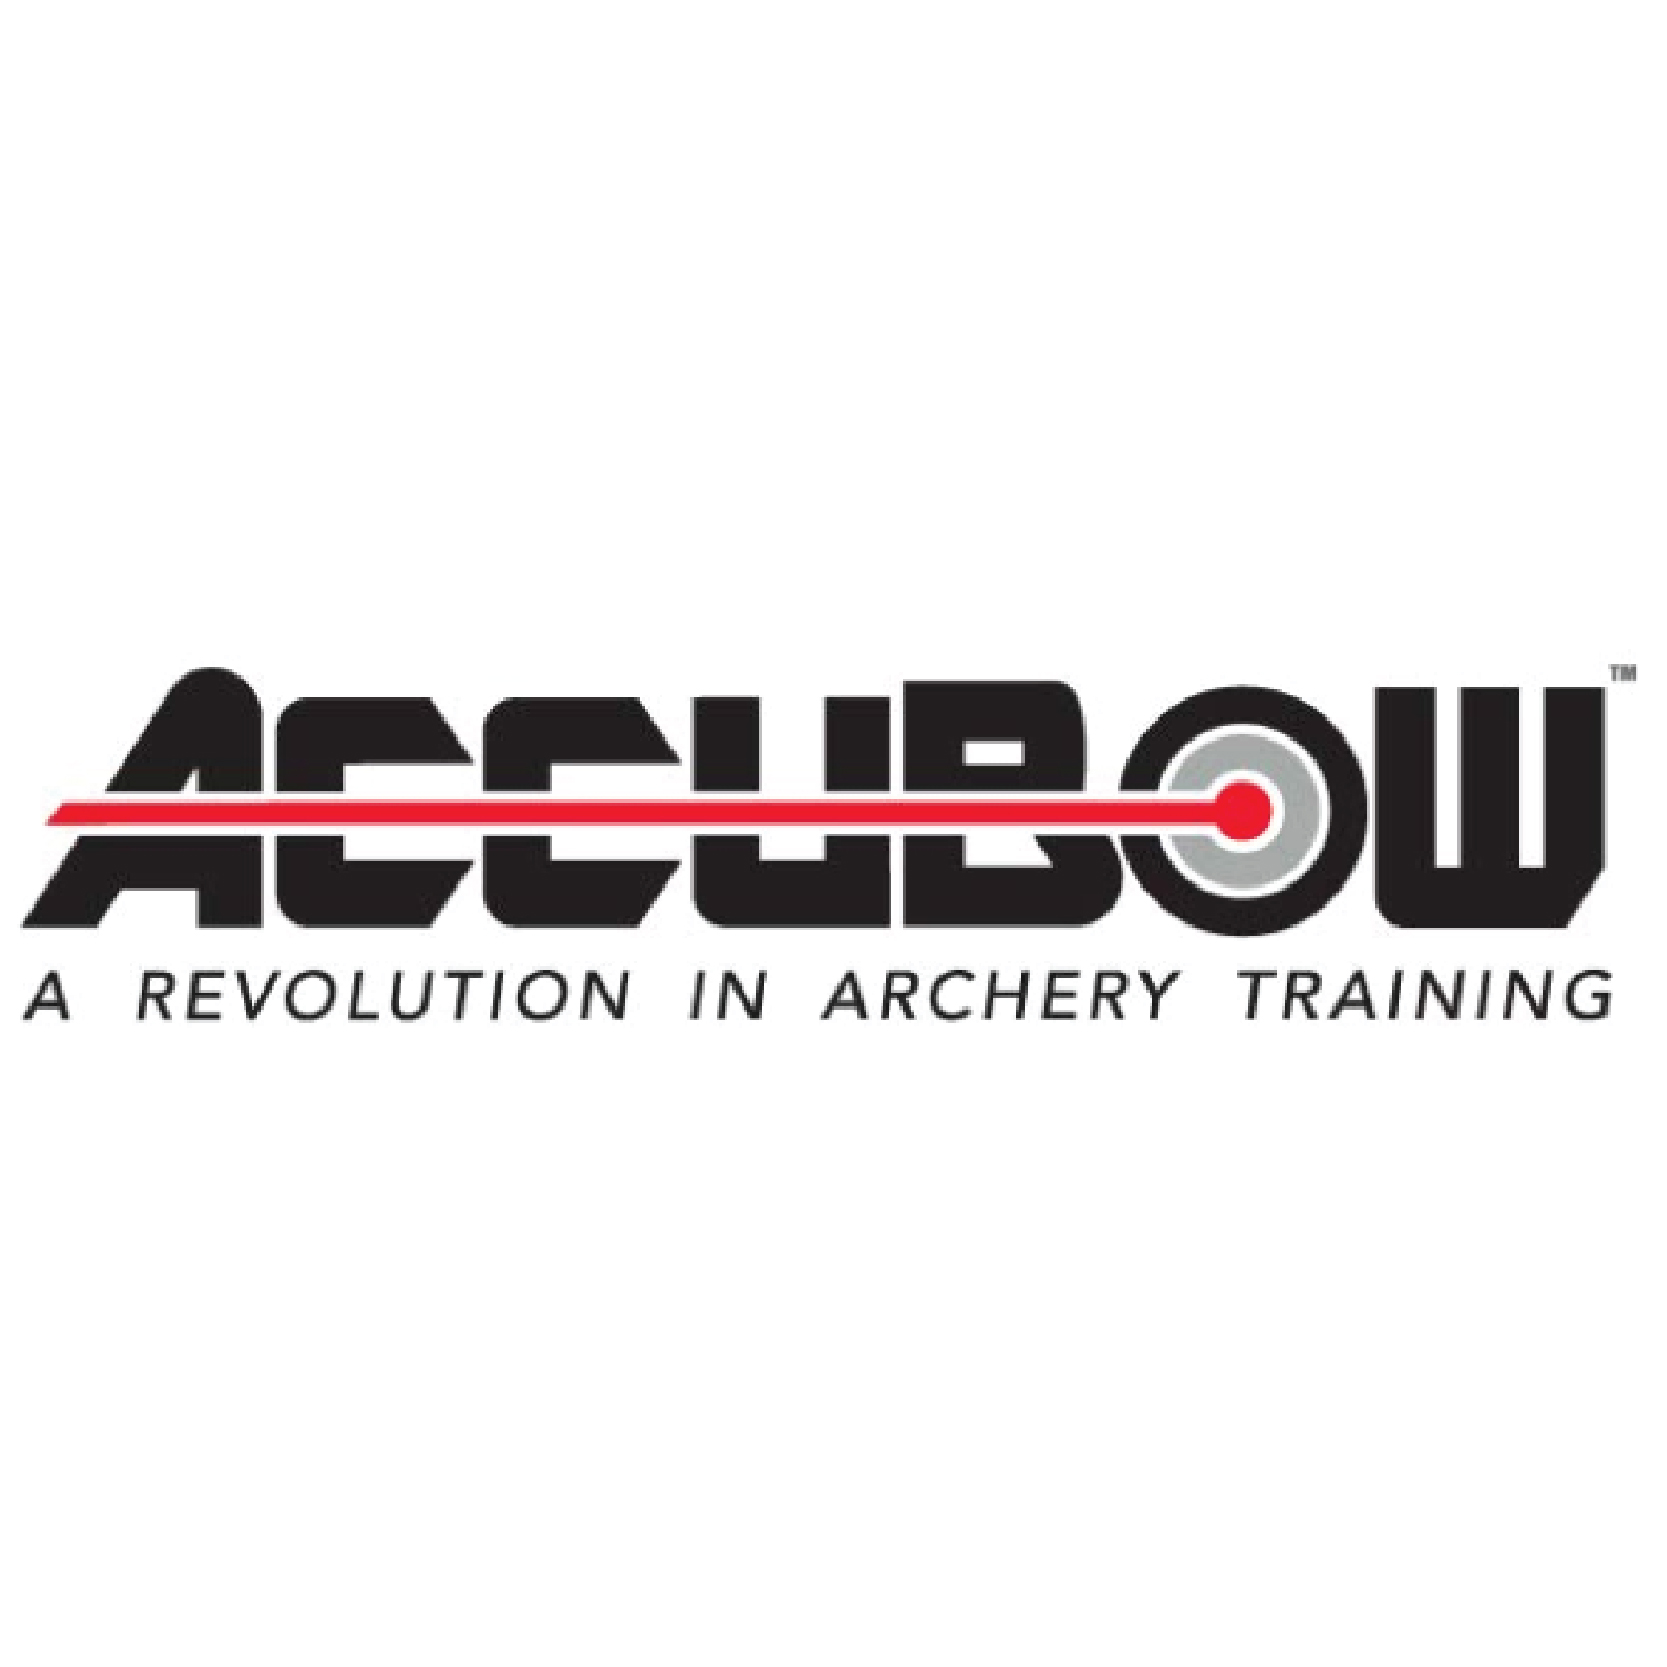 Accubow Square Logo Dealer Pro App-01-01.jpg